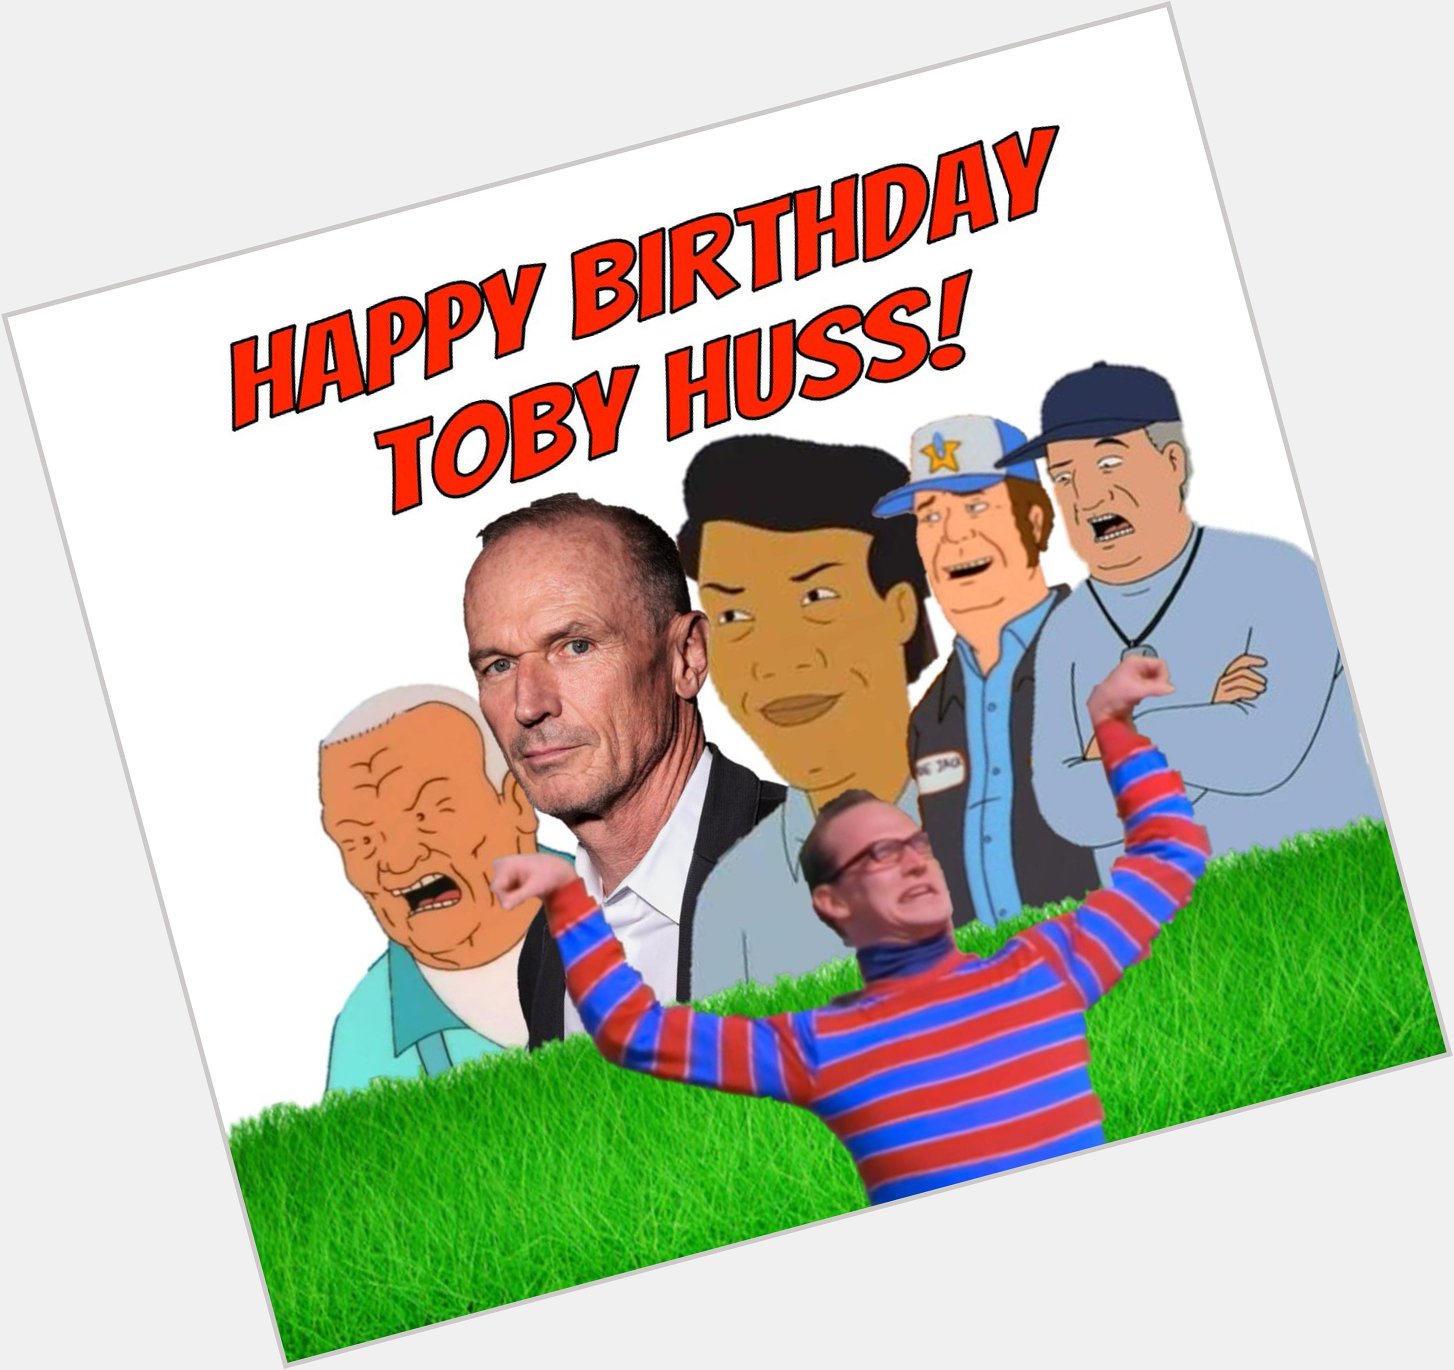 Happy Birthday Toby Huss!  